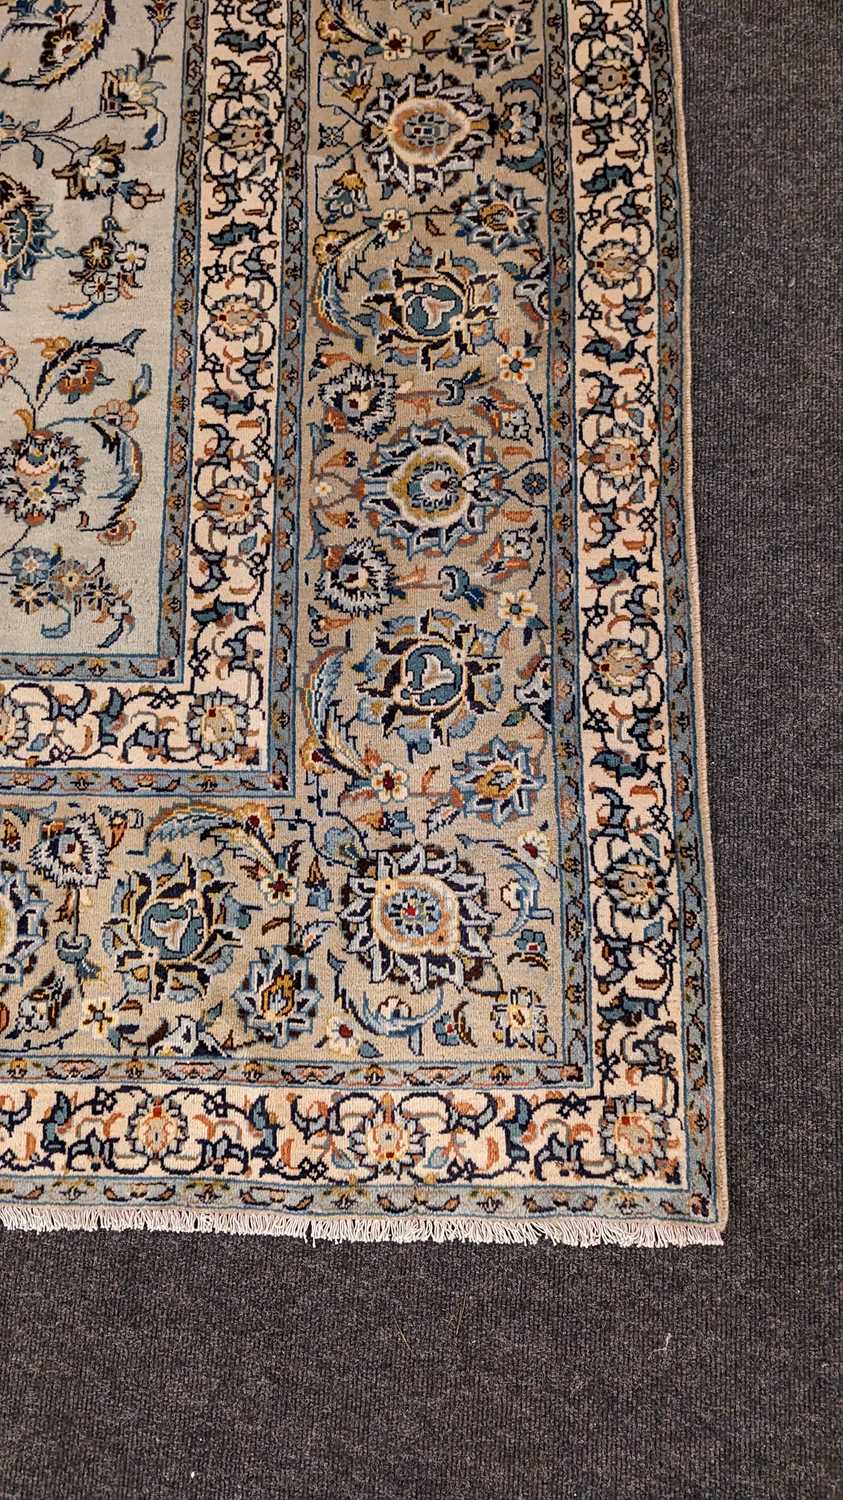 A Kashan carpet - Image 15 of 36